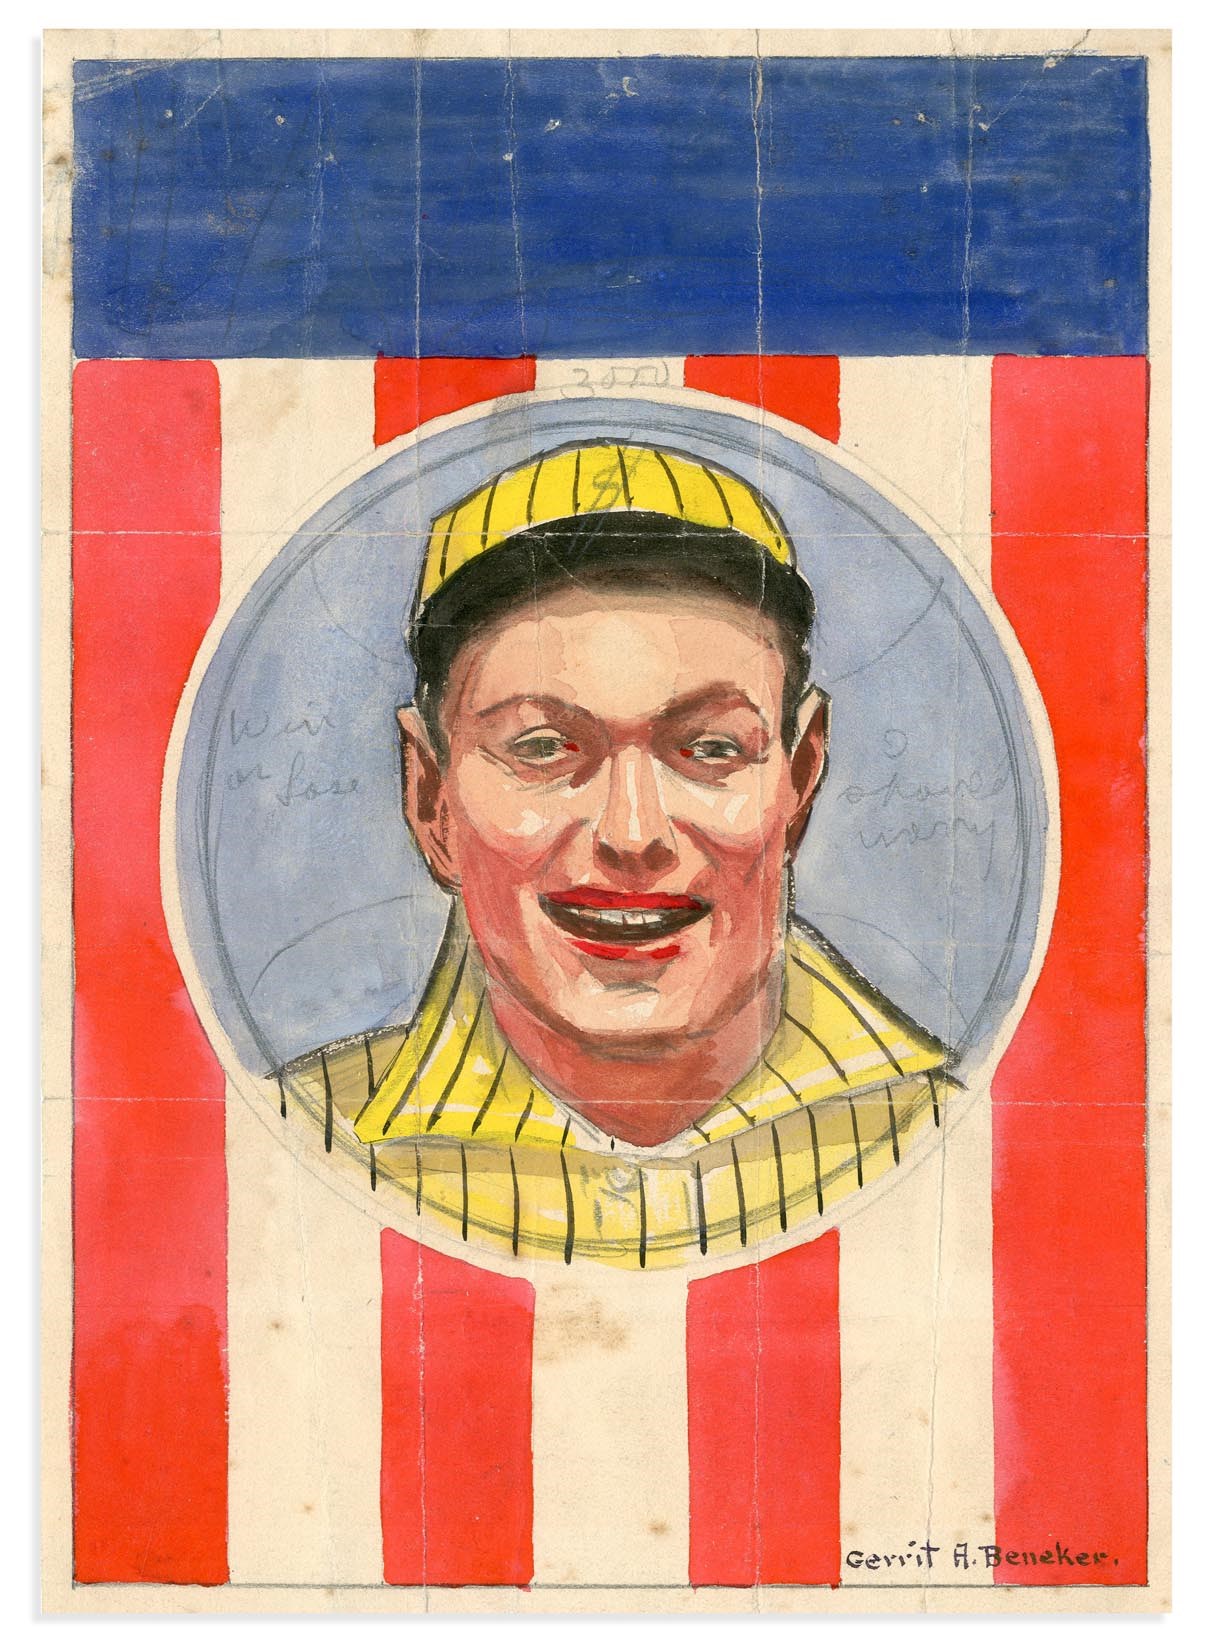 - November 1913 "New World's Champions" Baseball Magazine Cover Art Study by Gerrit Beneker (1882-1934)